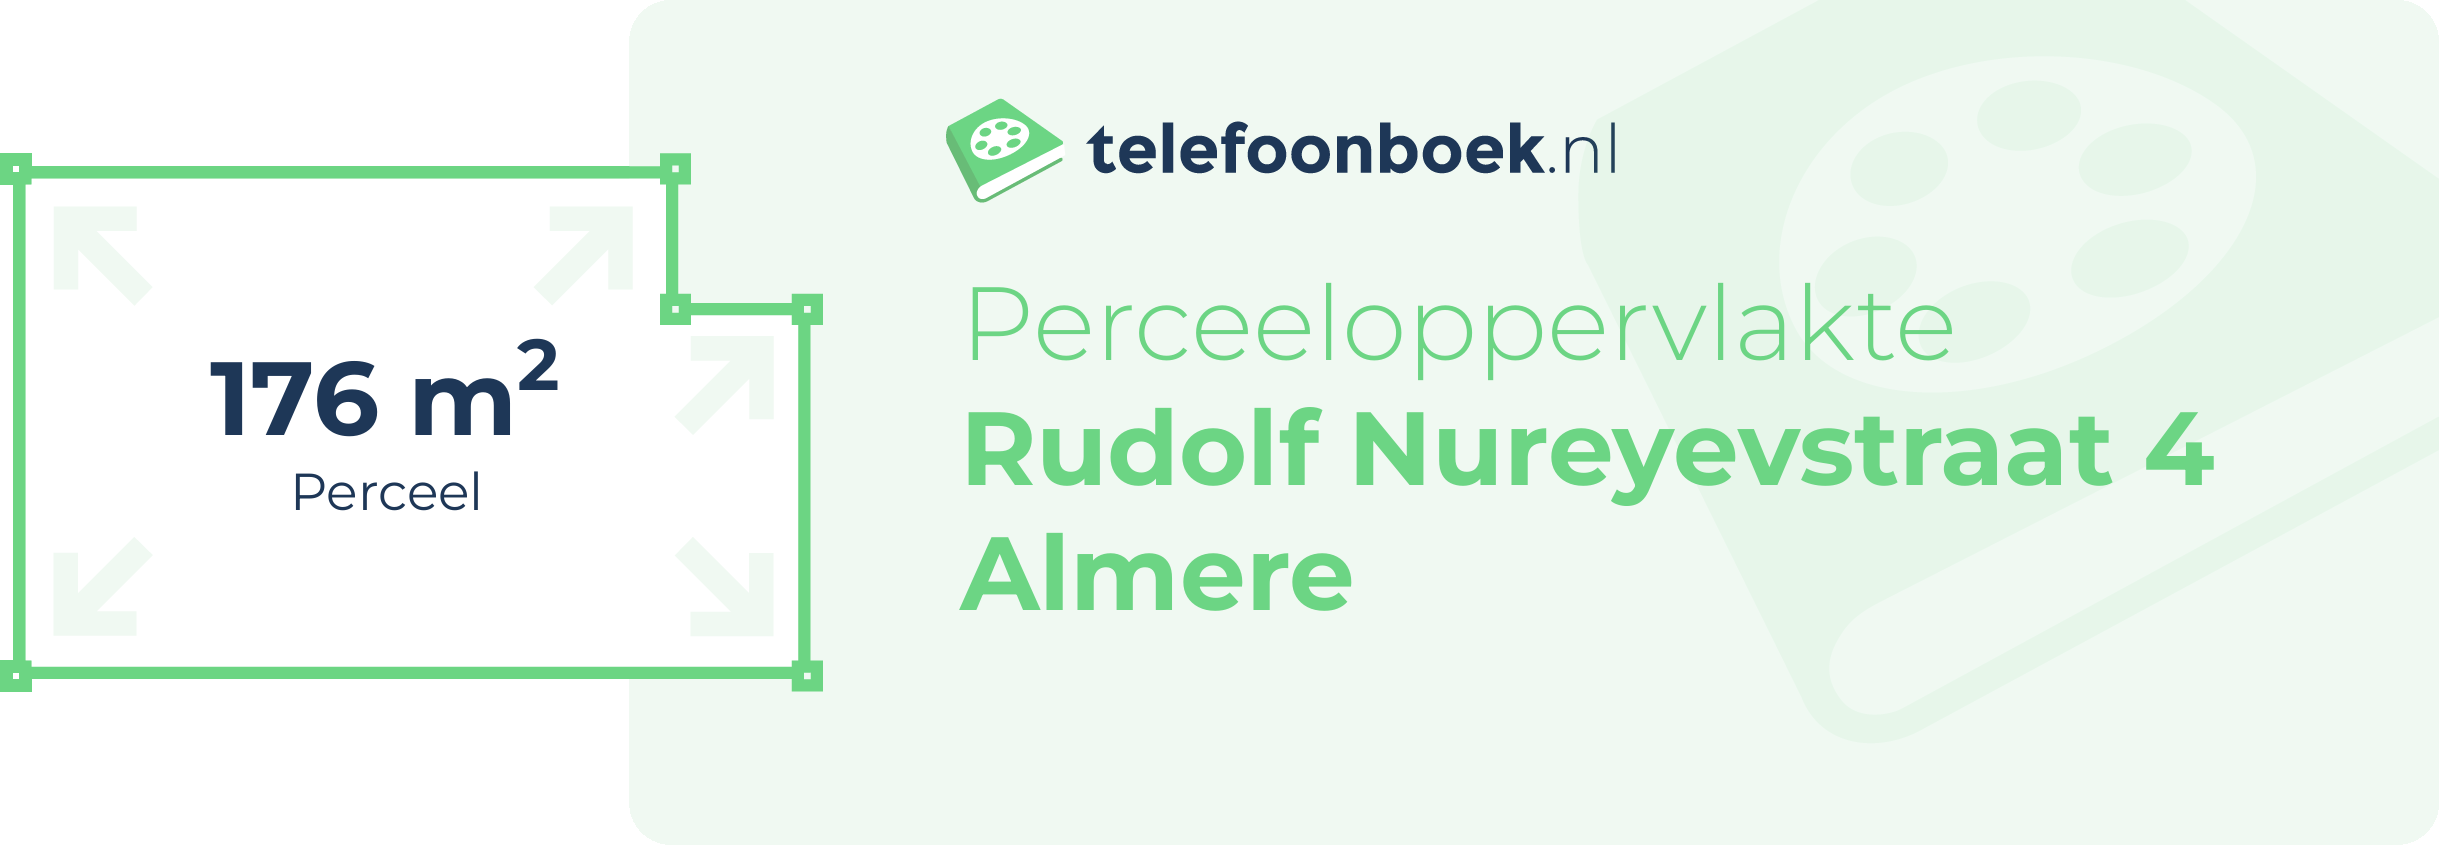 Perceeloppervlakte Rudolf Nureyevstraat 4 Almere